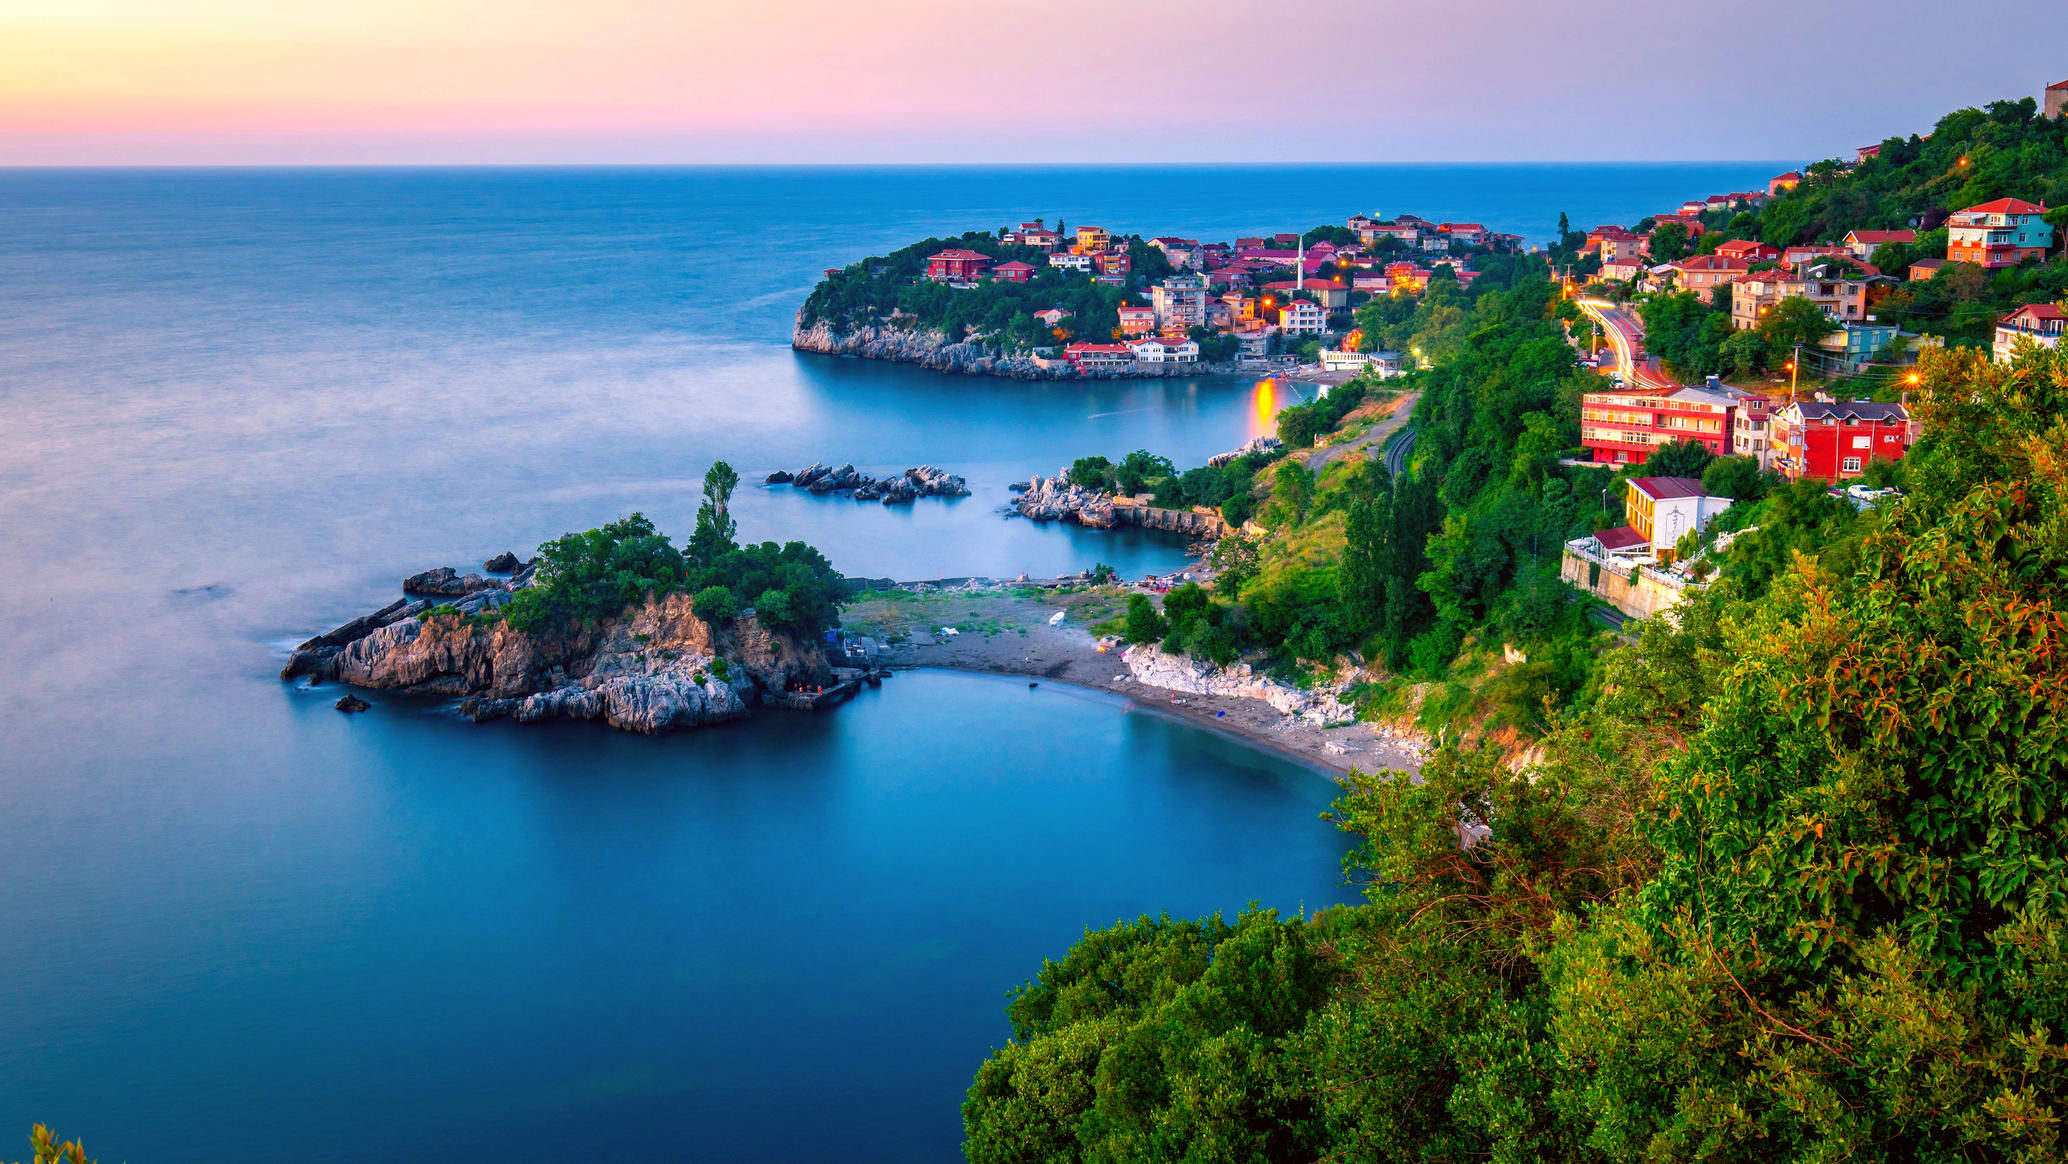 43 diving spots identified for tourism in Turkey’s Black Sea region